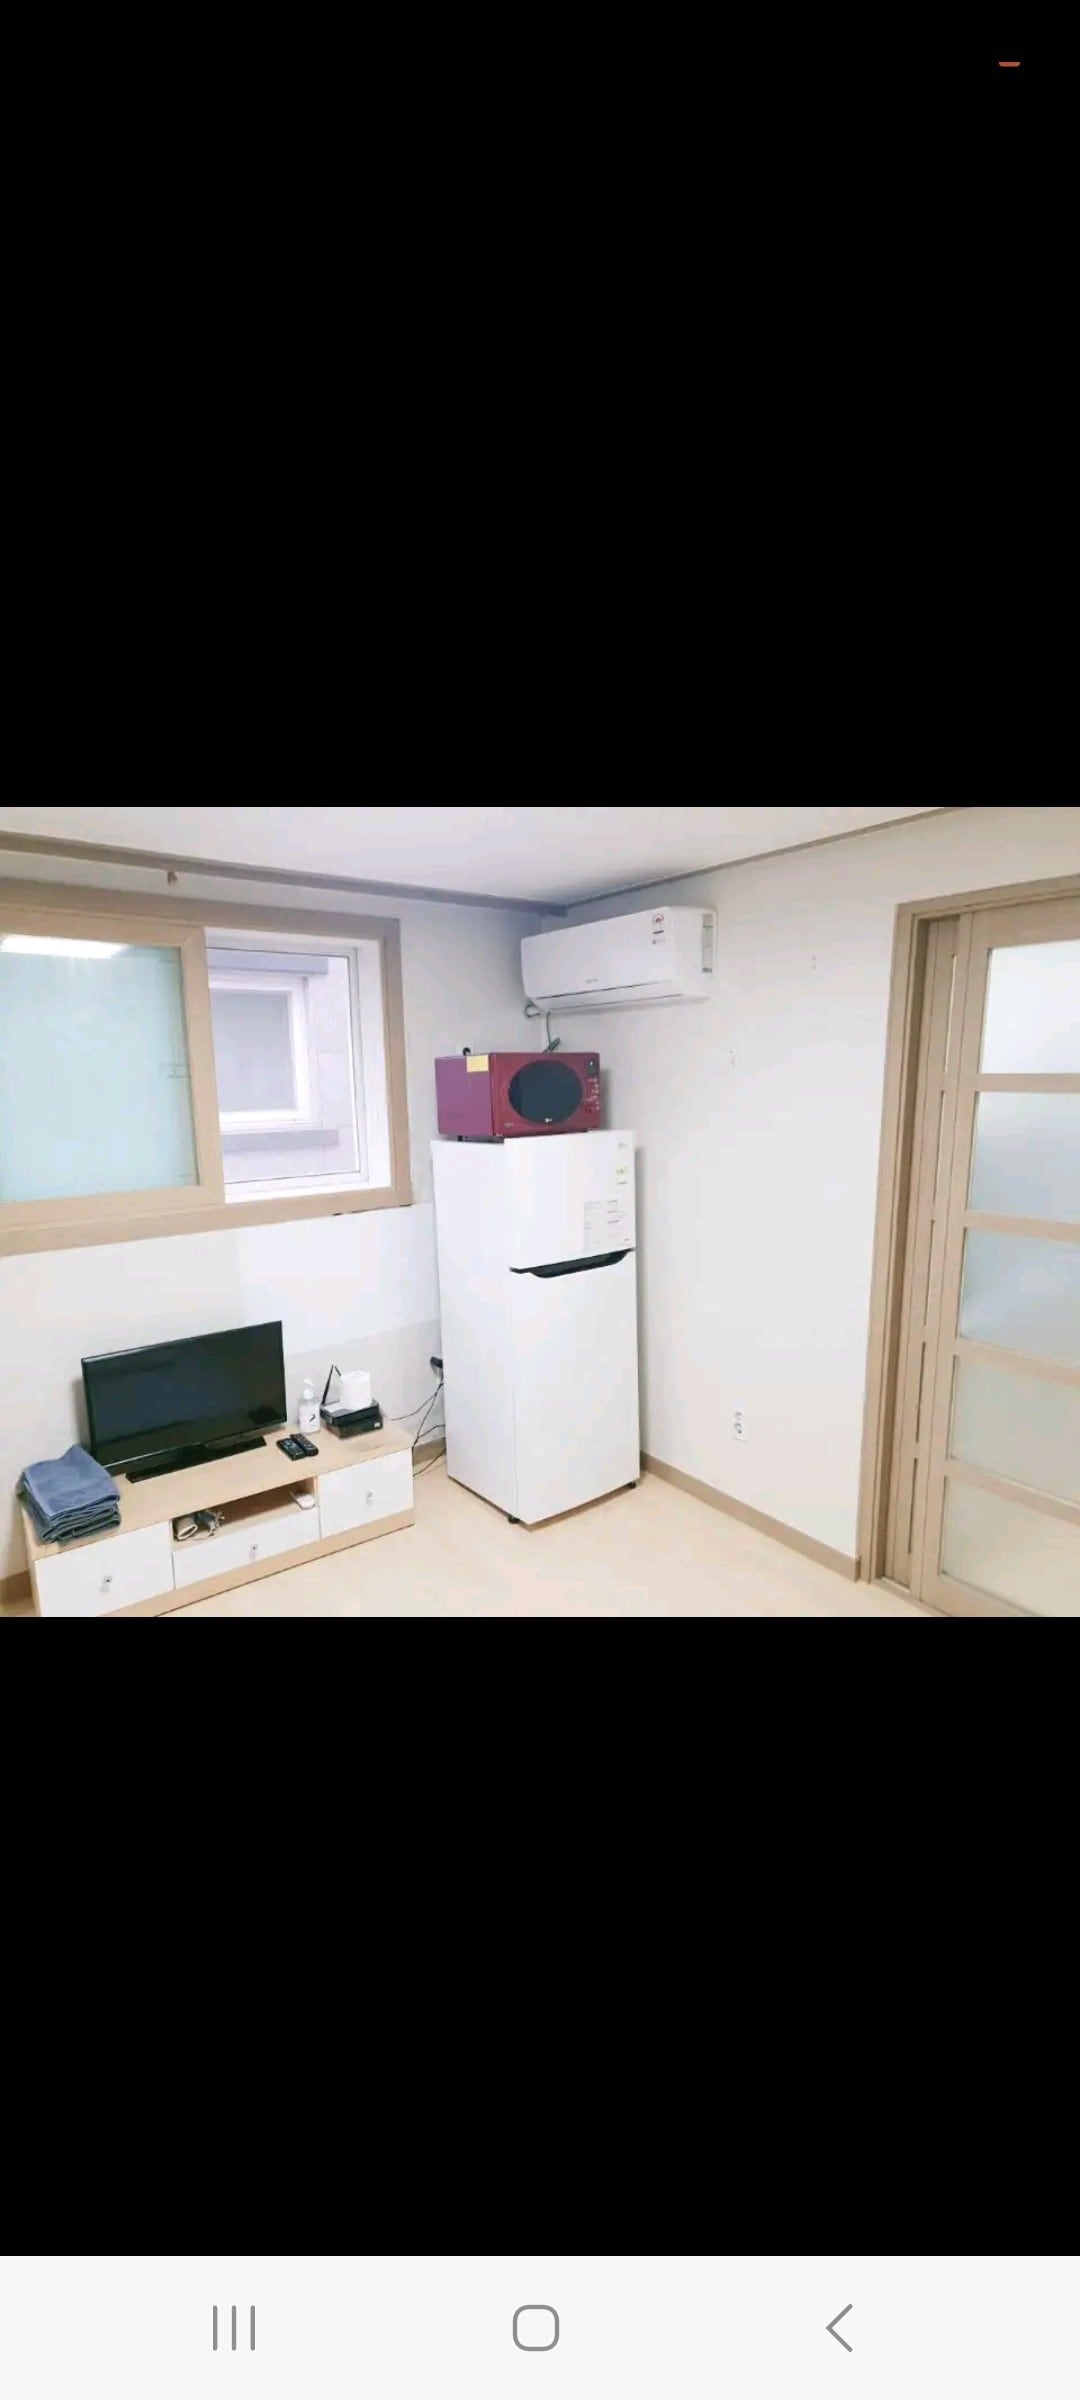 302 Pyeongtaek Songtan Seojeong-dong新别墅单间公寓短期长期全套房